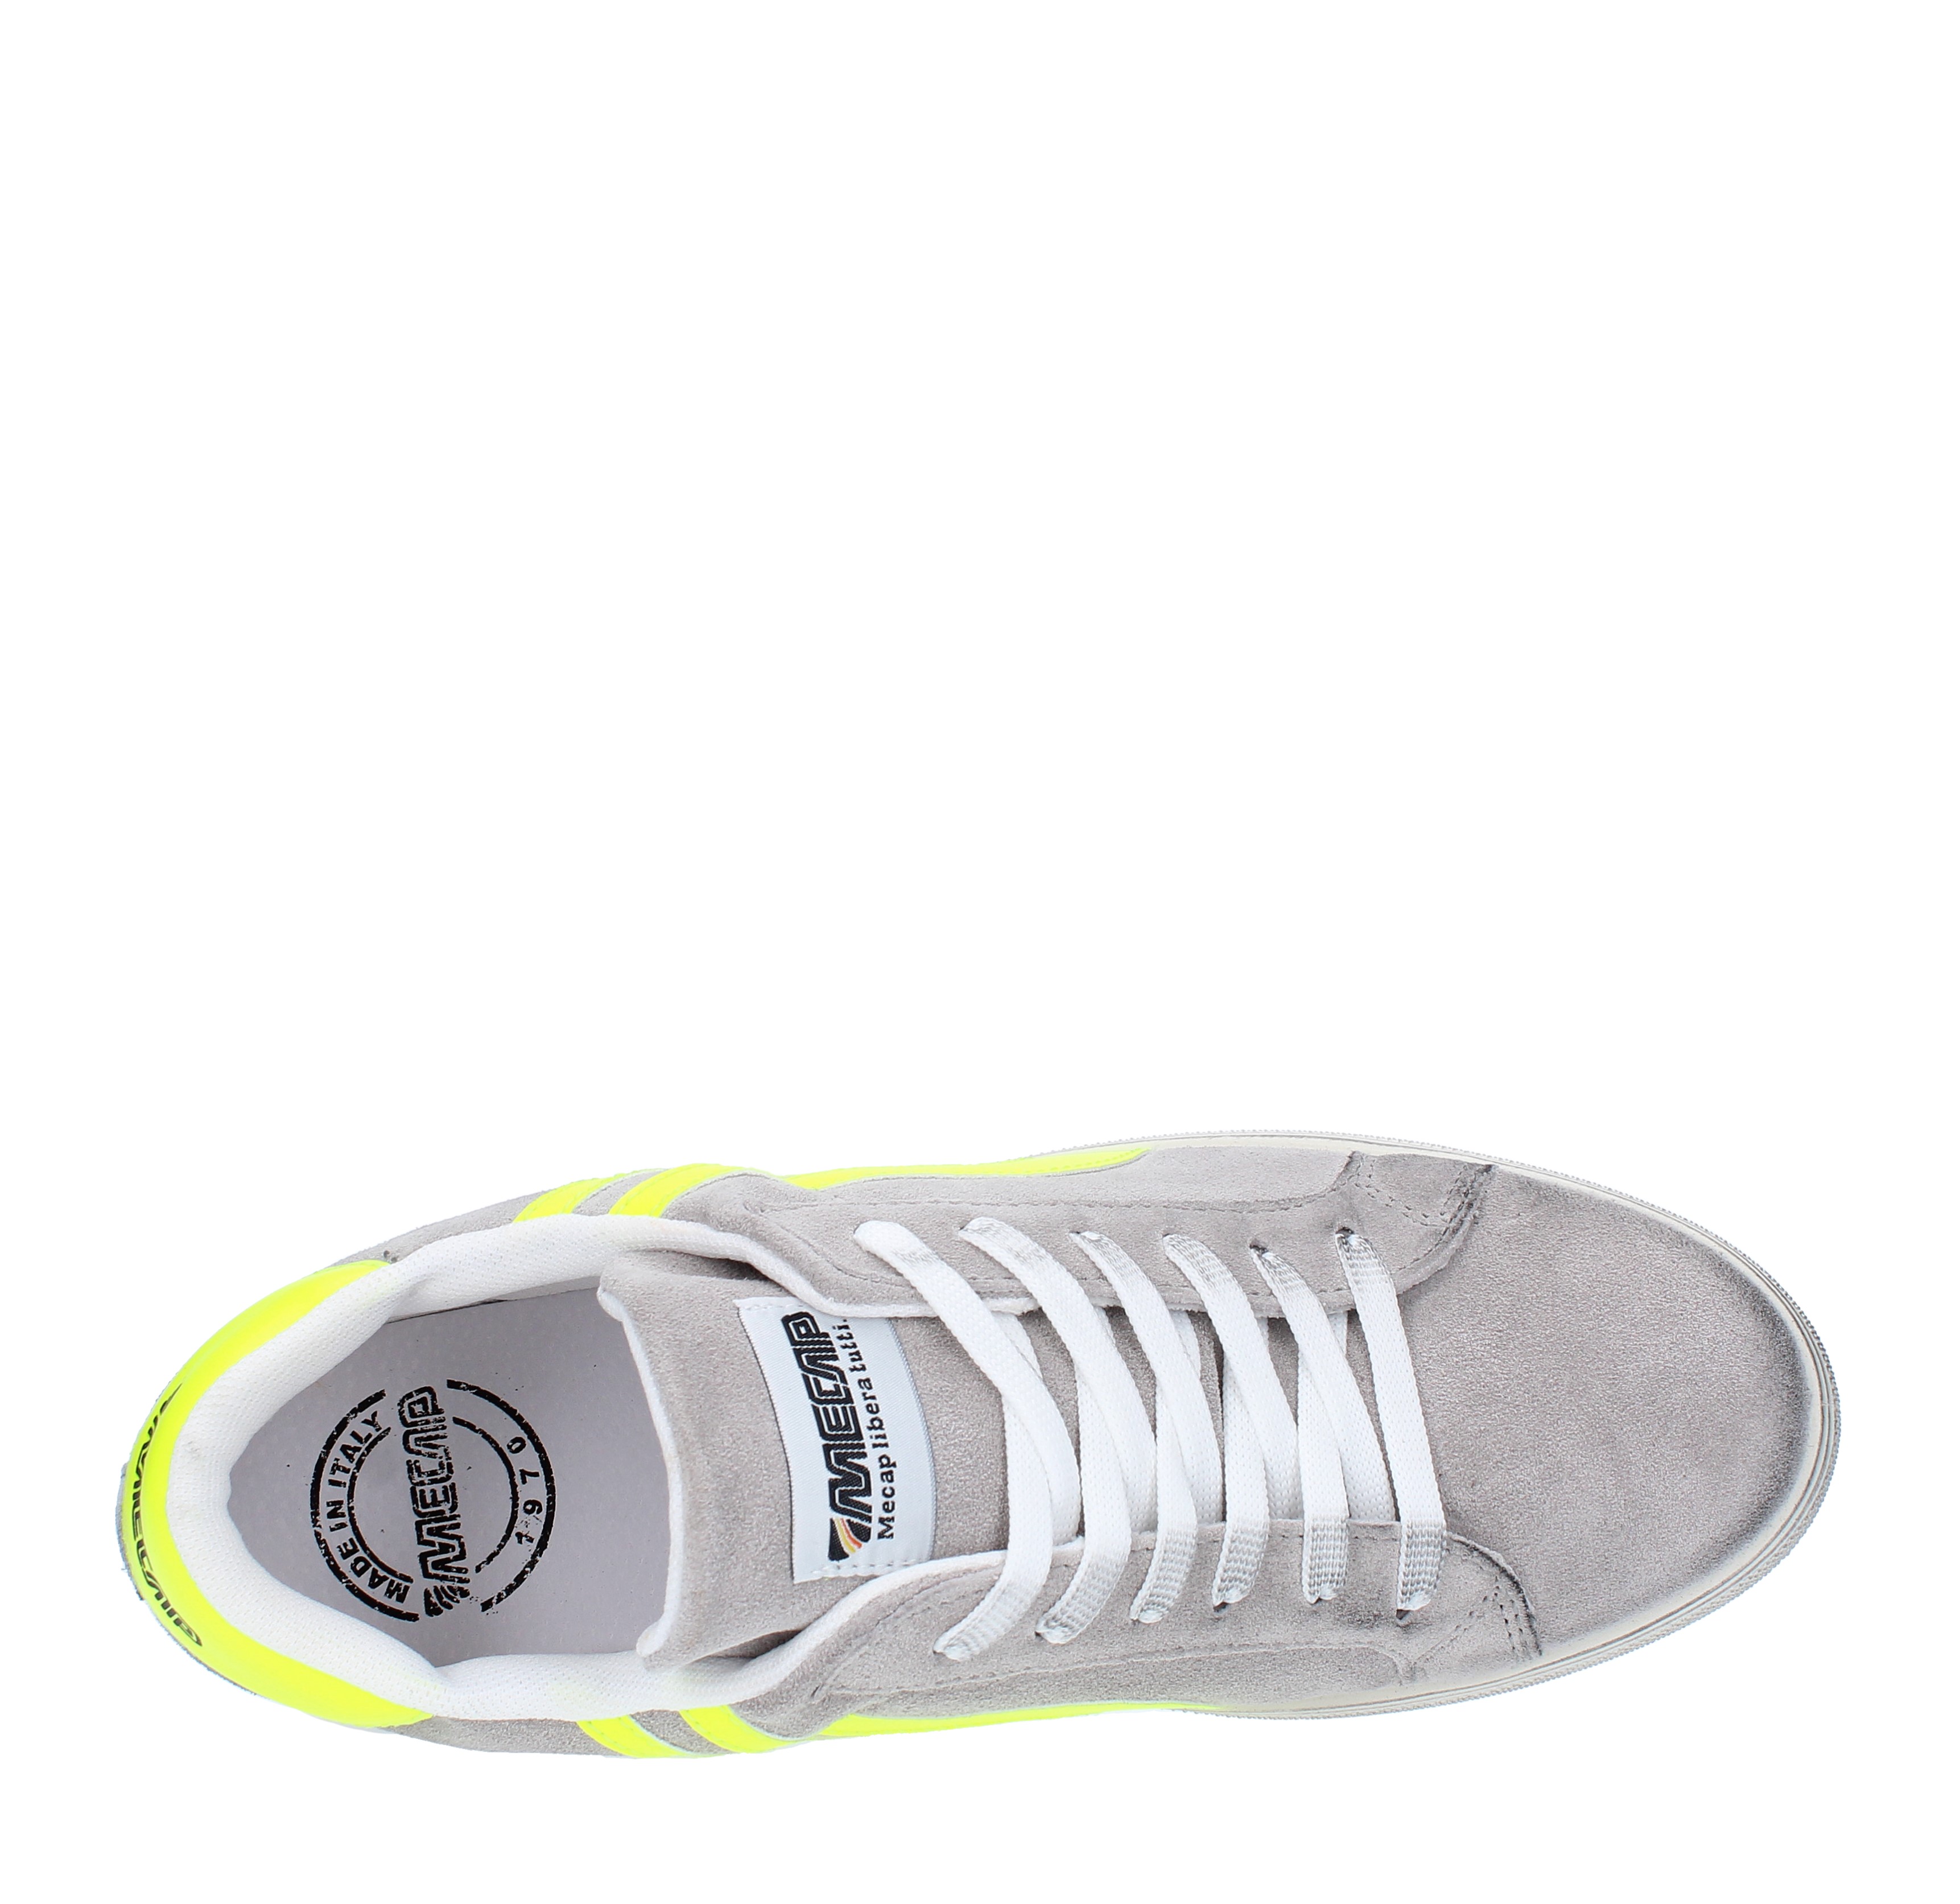 Sneakers in camoscio - MECAP - Ginevra calzature